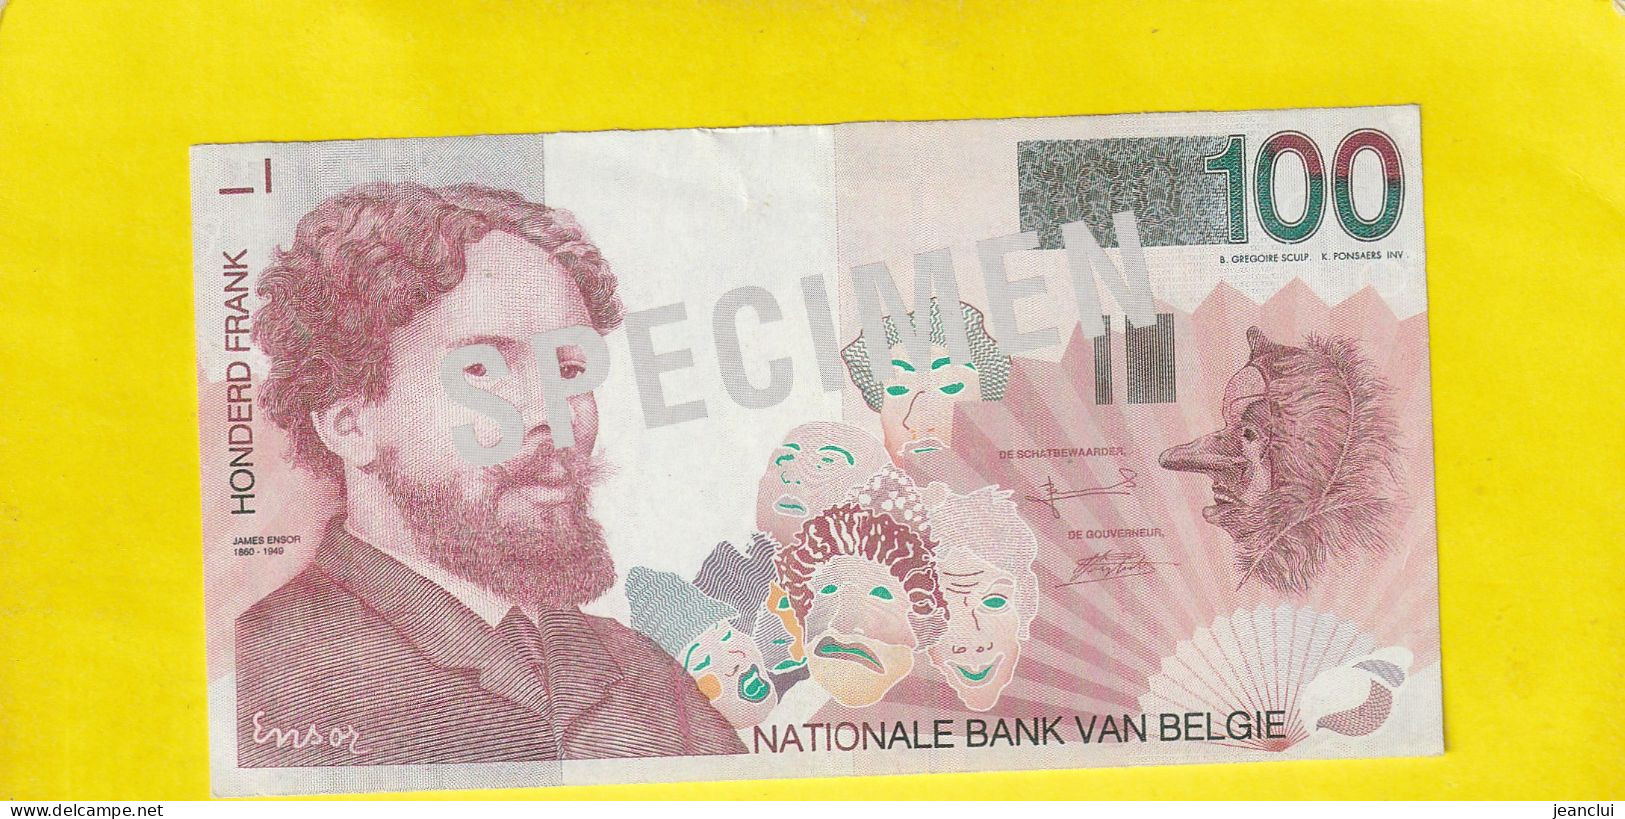 SPECIMEN . NATIONALE BANK VAN BELGIE  .  100 FRANCS  .  JAMES ENSOR 1860-1949 .  2 SCANNES  .  ETAT LUXE . UNC - [ 8] Fakes & Specimens